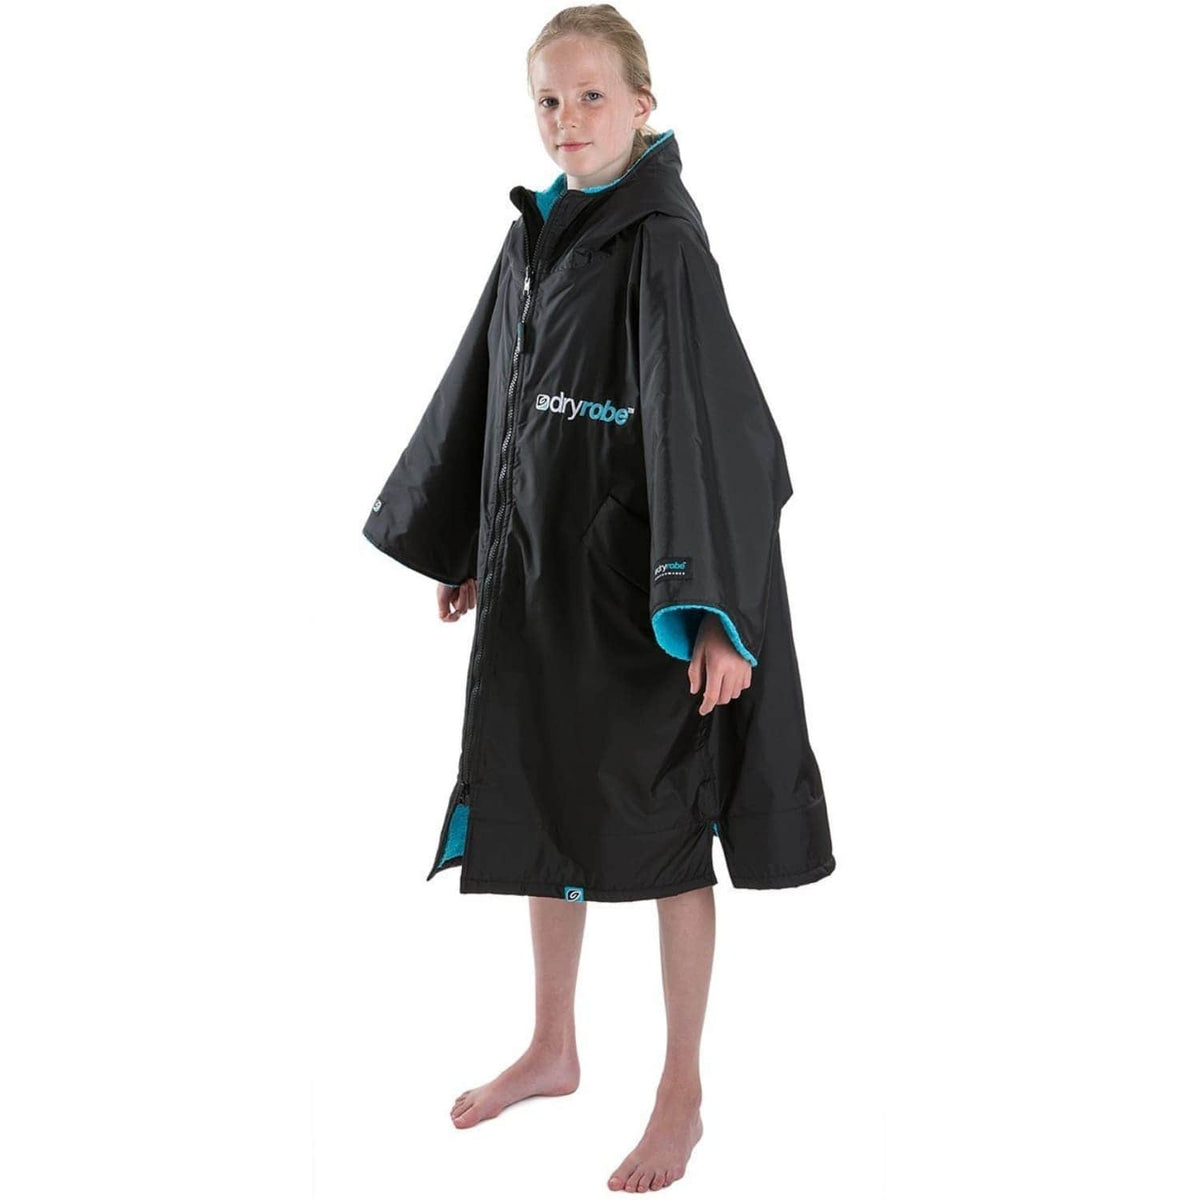 Dryrobe Advance Kids Short Sleeve Drying &amp; Changing Robe - Black/Blue - Changing Robe Poncho Towel by Dryrobe